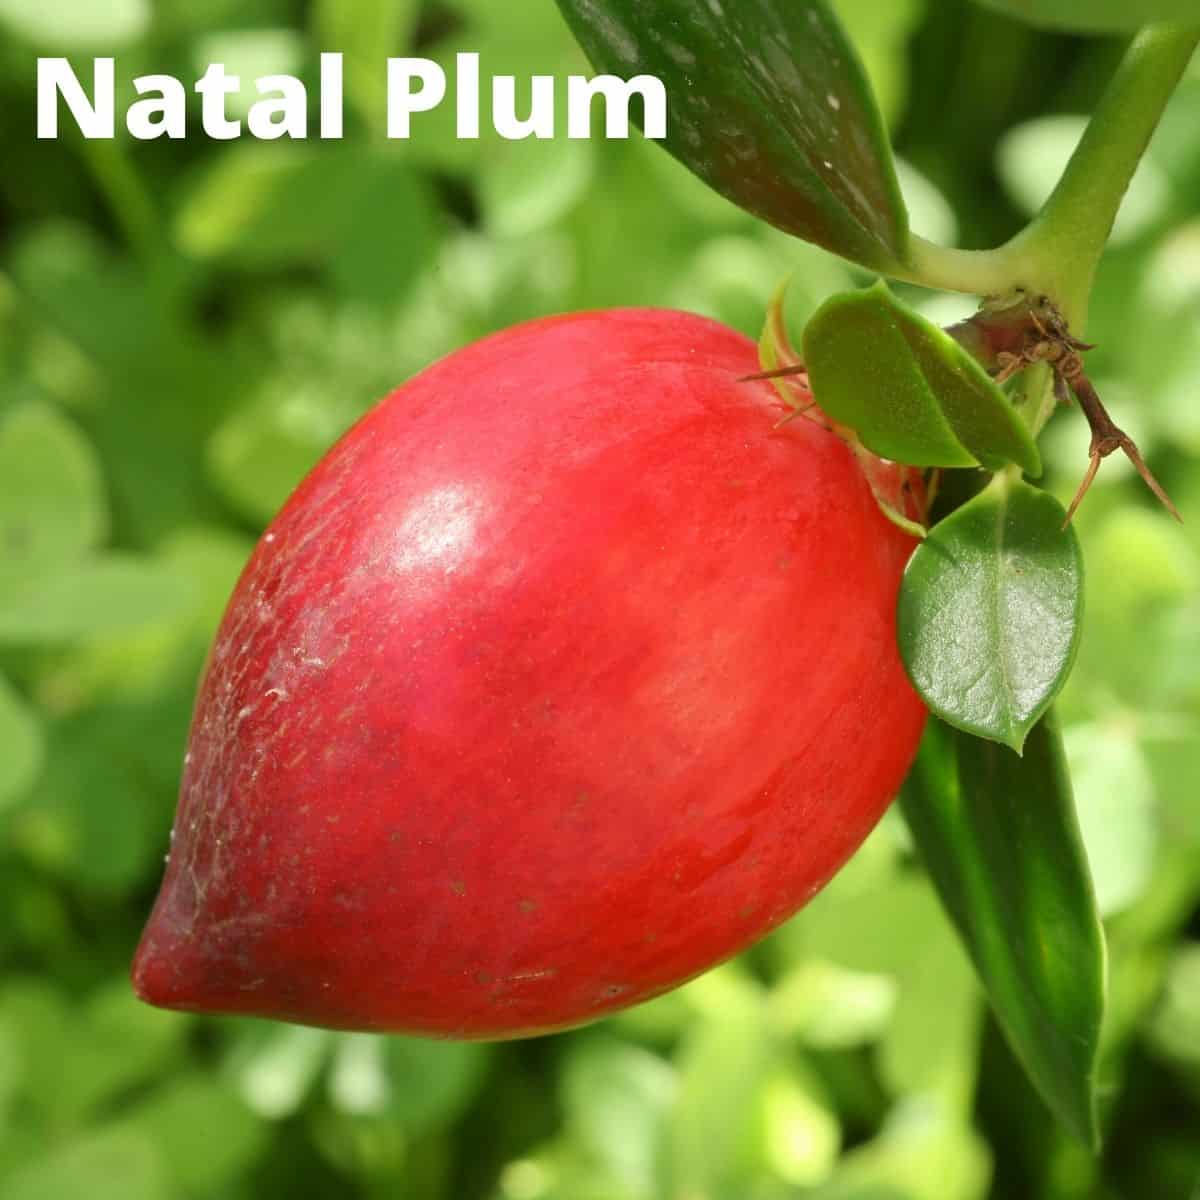 Natal plum on tree branch. 